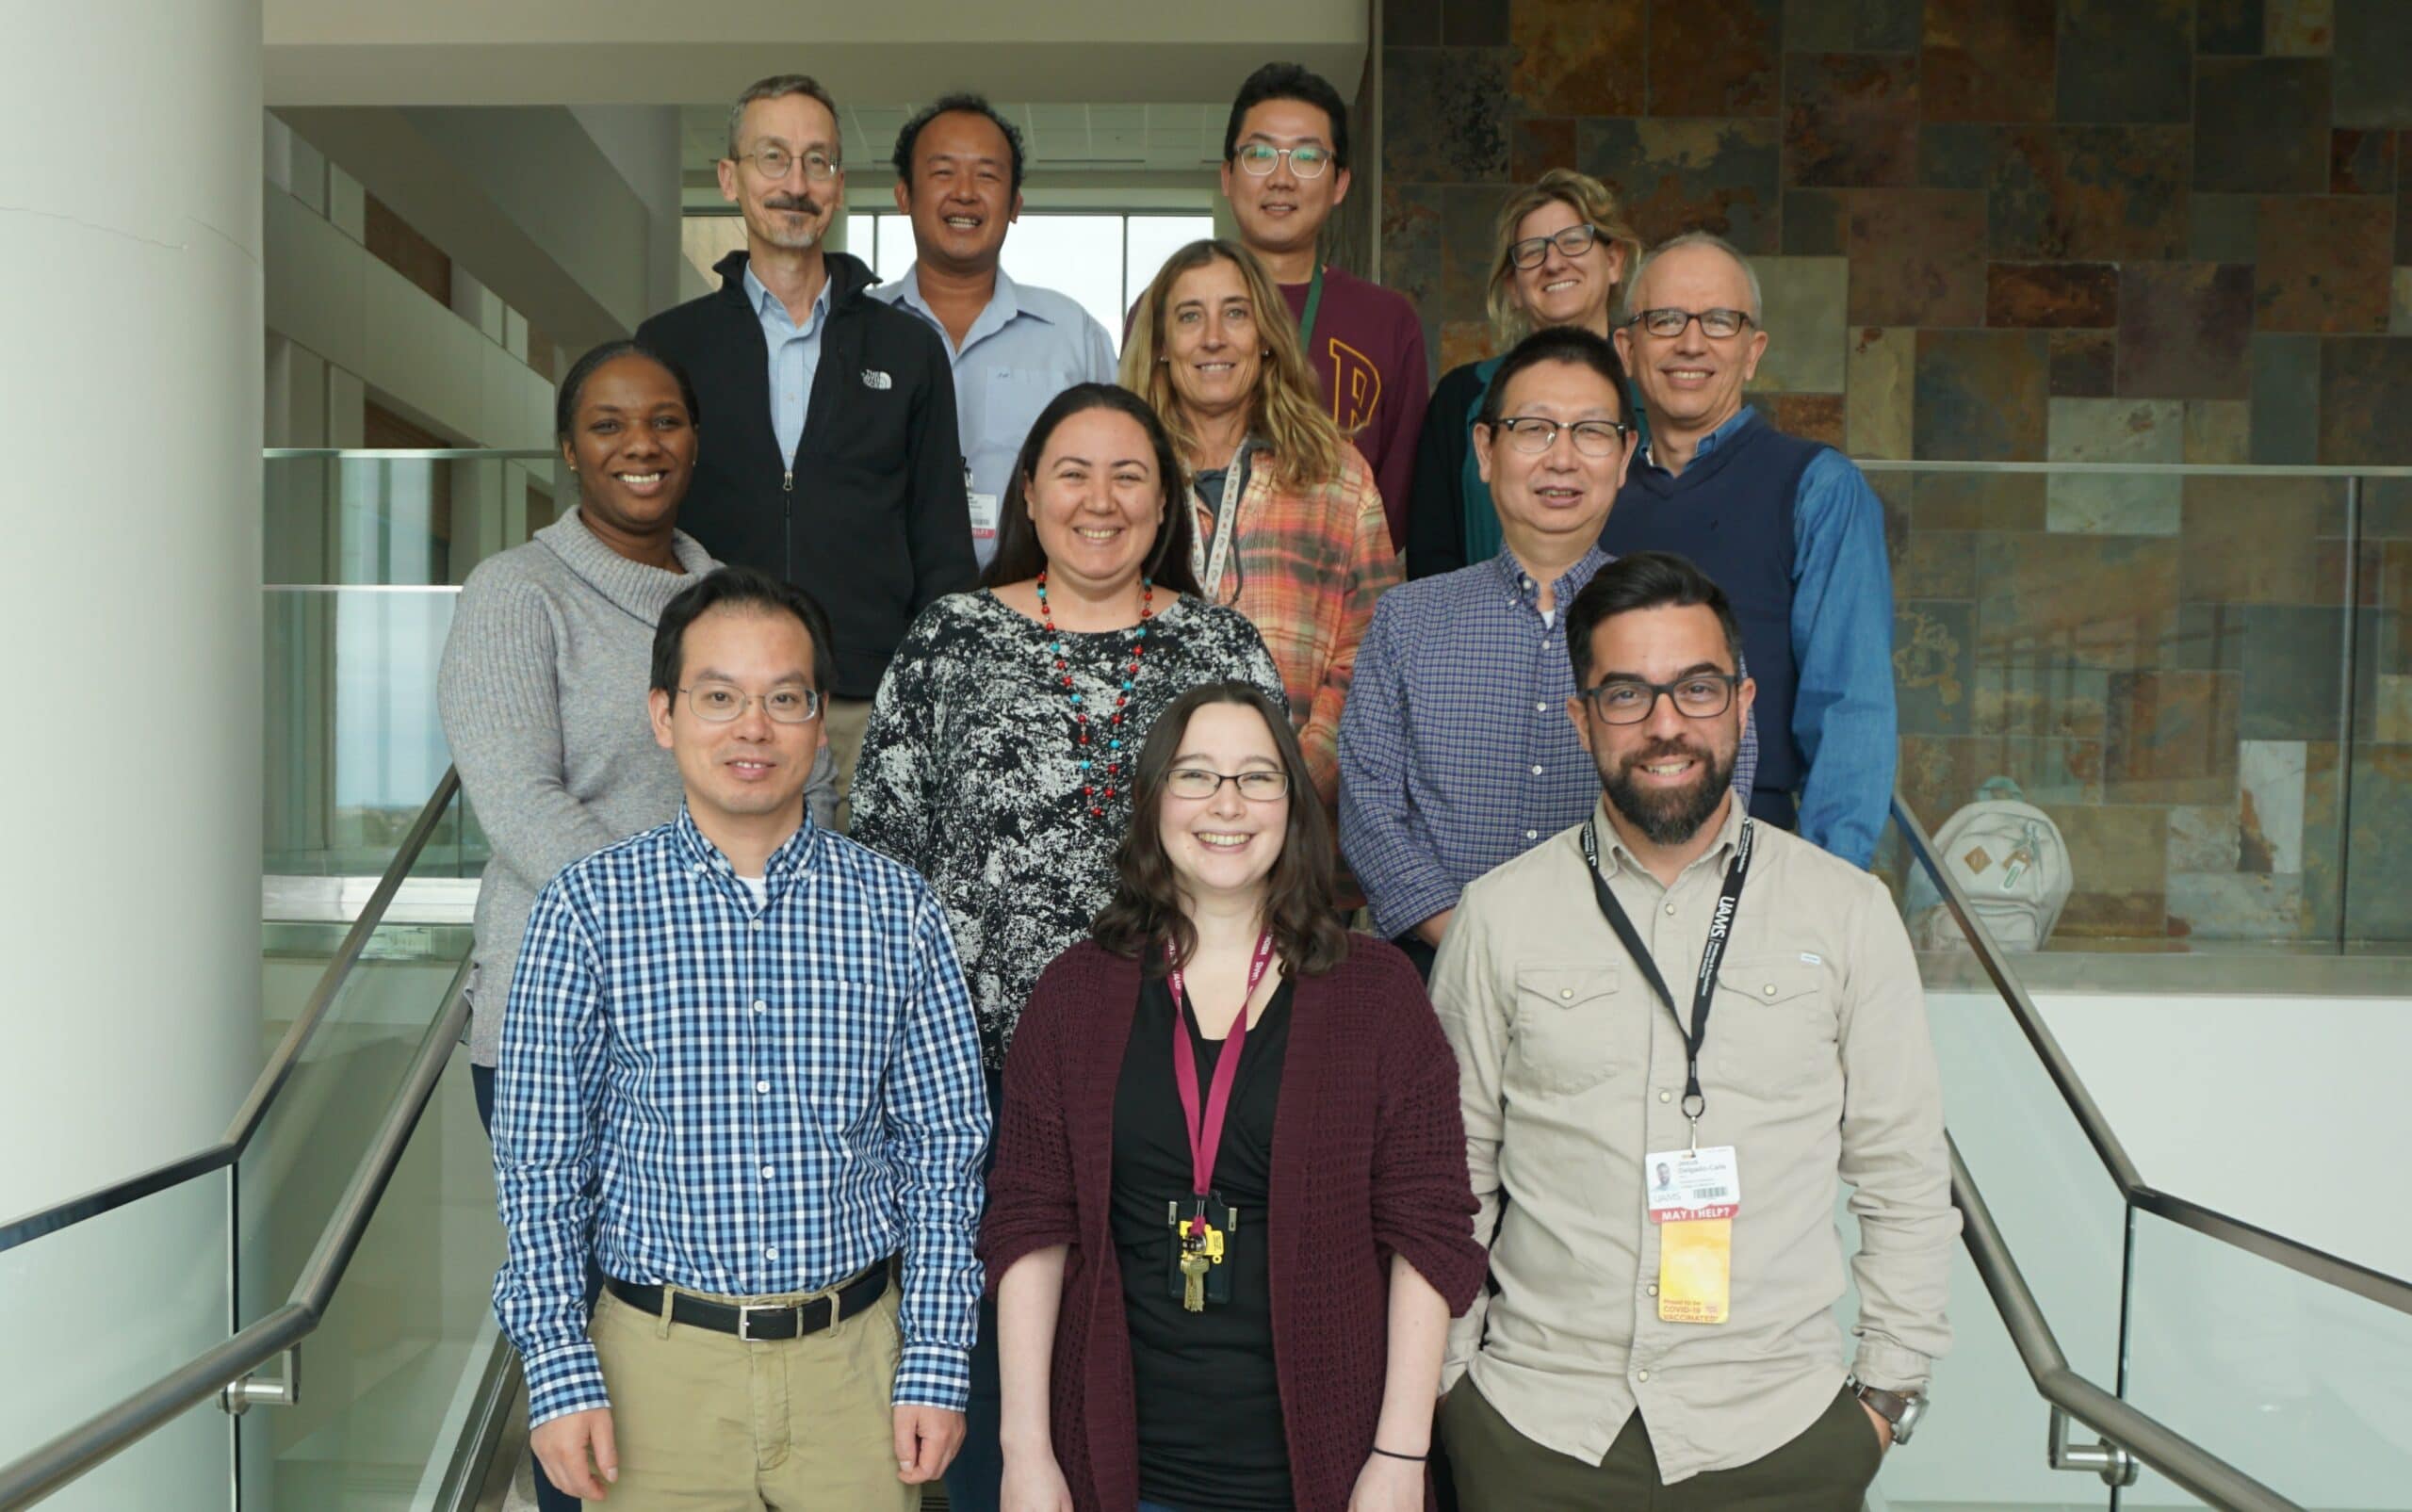 Team members of the UAMS Center for Musculoskeletal Disease Research include:, front row: Jinhu Xiong M.D., Ph.D., Amy Sato, Ph.D., Jesus Delgado-Calle, Ph.D.; second row: Janeelle Whitfield, Melda Onal, Ph.D., Qiang Fu, M.D., Ph.D.; third row: Charles O’Brien, Ph.D., Maria Almeida, Ph.D., Roy Morello, Ph.D.; back row: Intawat Nookaew, Ph.D., Ha-neui Kim, Ph.D., and Elena Ambrogini, M.D., Ph.D.